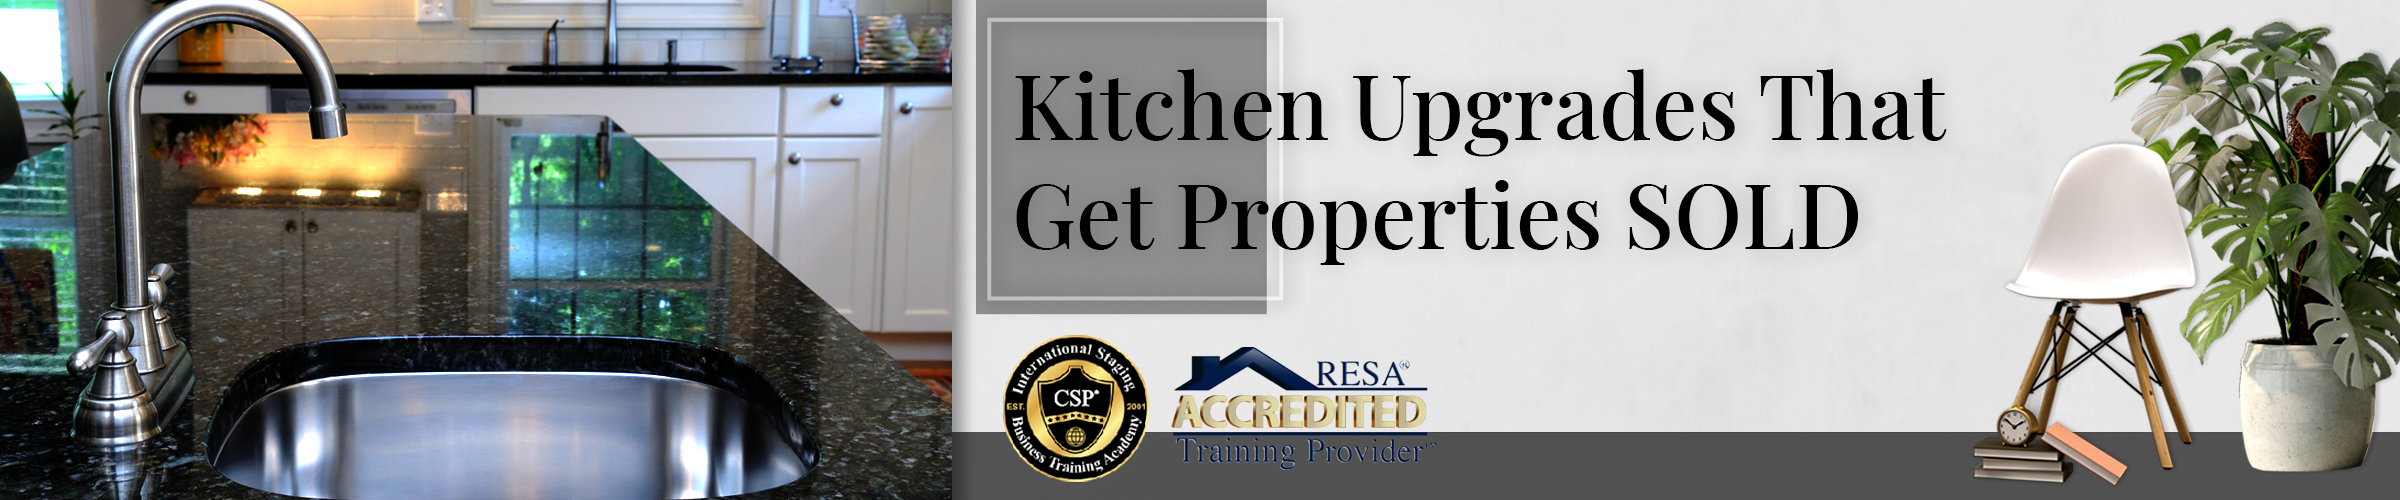 kitchen upgrades that get properties sold